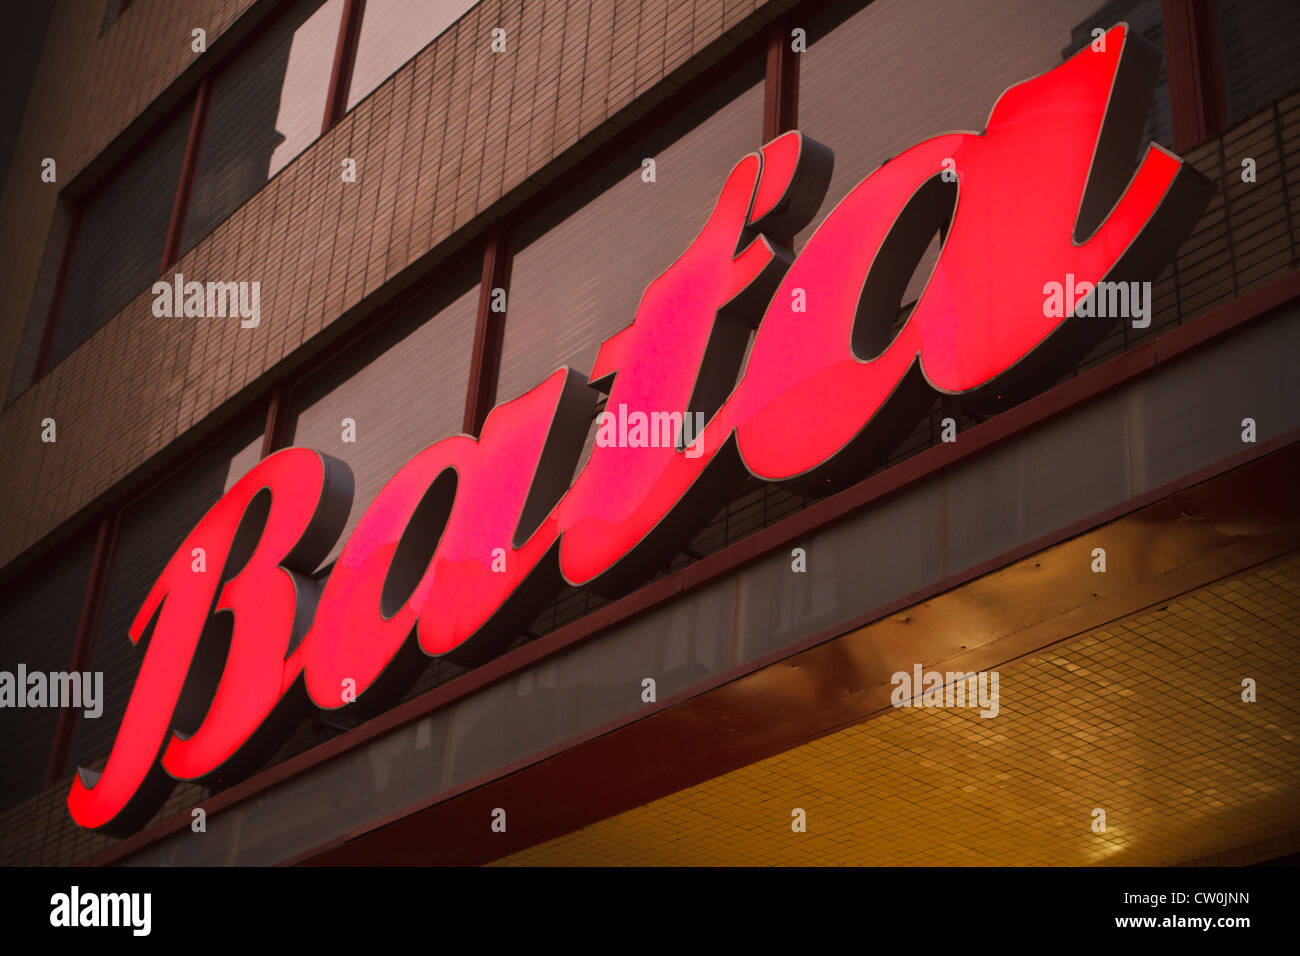 Bata logo on shop front in Brno, Czech Republic Stock Photo - Alamy